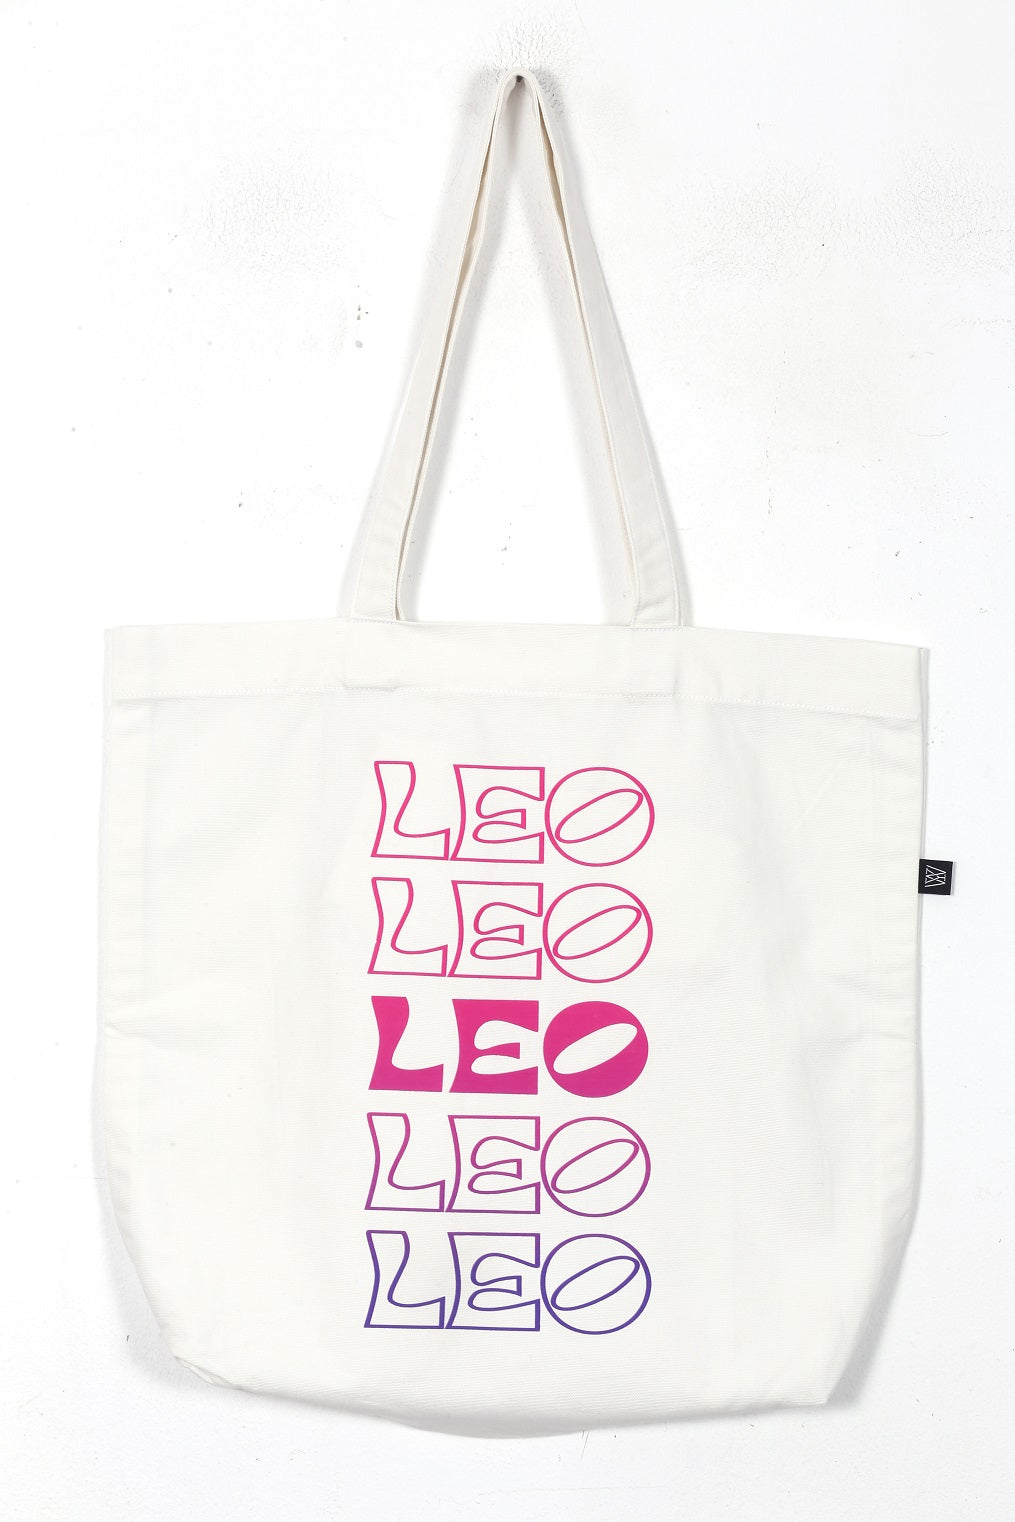 Zodiac Series Tote Bag - Leo